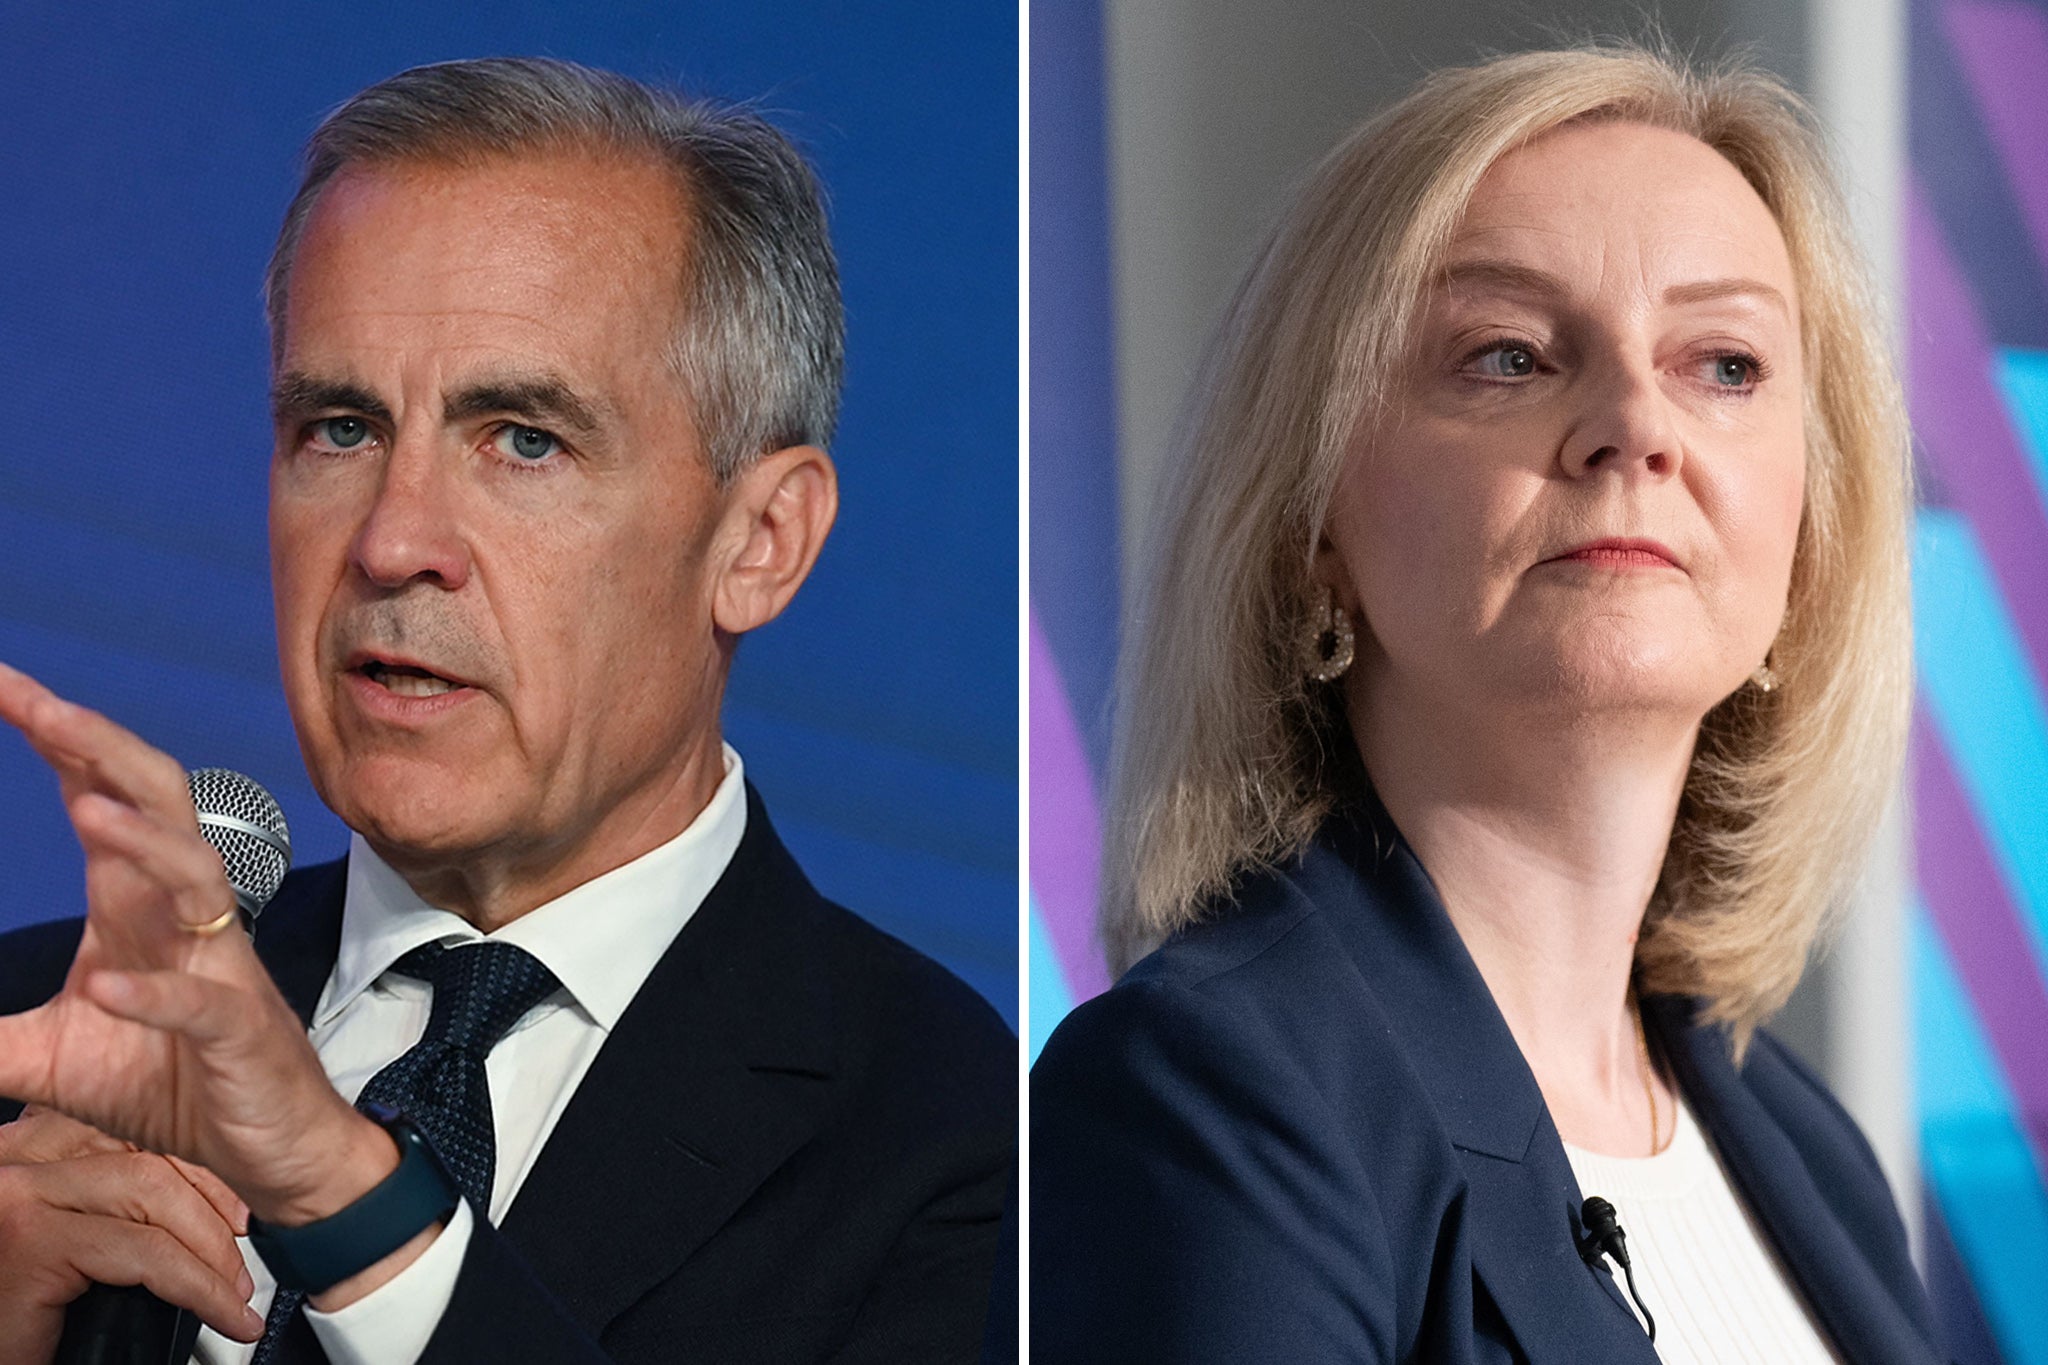 Mark Carney vs Liz Truss: Who’s right on the UK economy